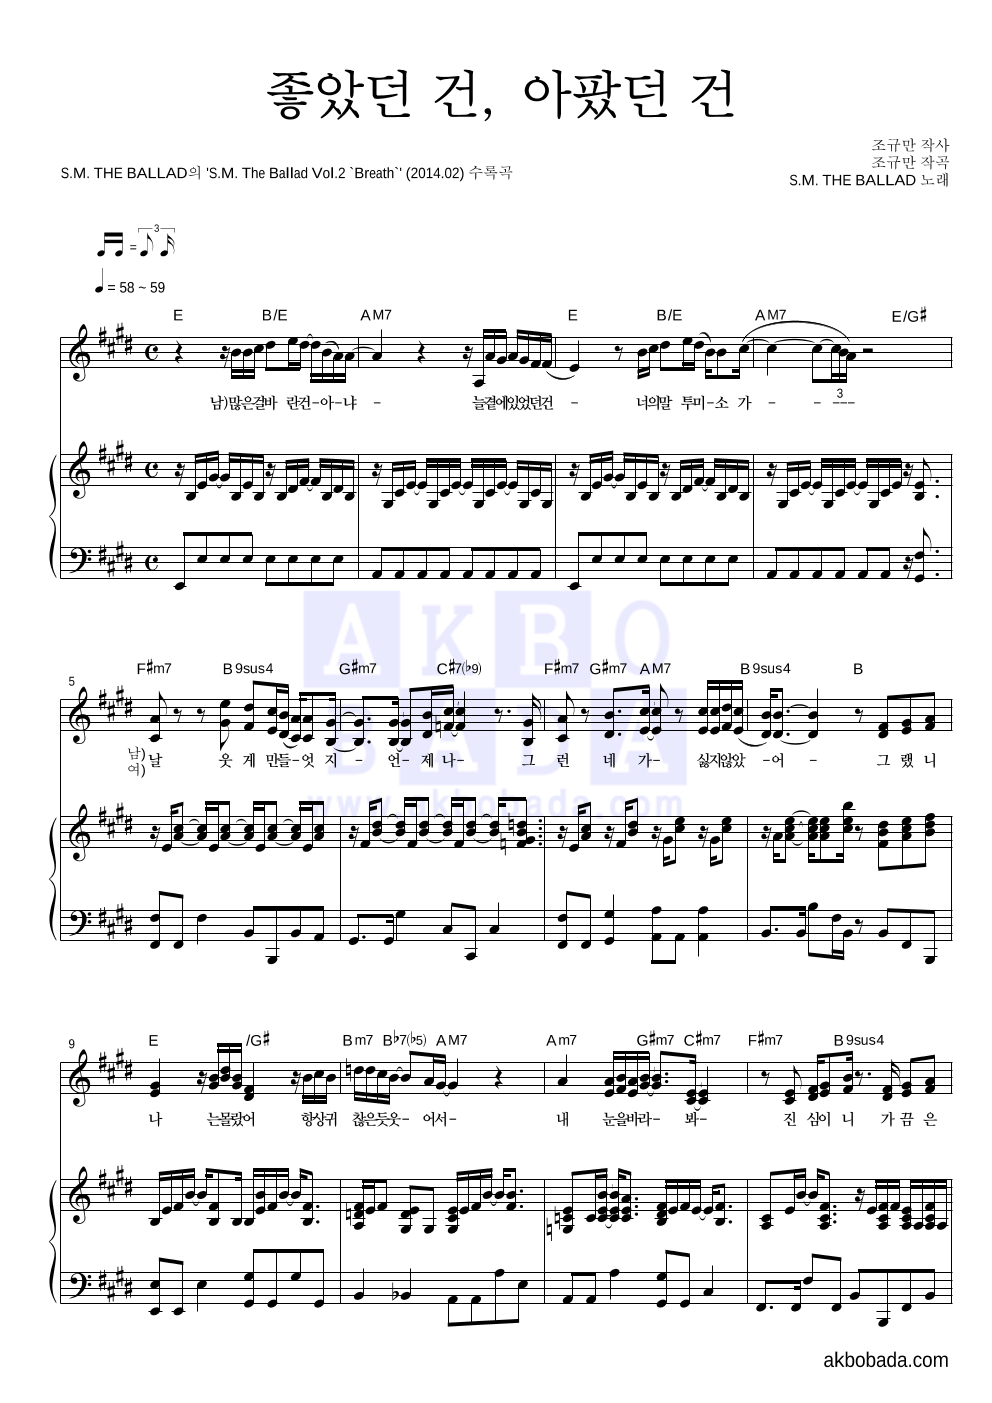 S.M. THE BALLAD - 좋았던 건, 아팠던 건 (When I Was... When U Were...) (Sung by F (KRYSTAL) & CHEN (EXO)) 피아노 3단 악보 